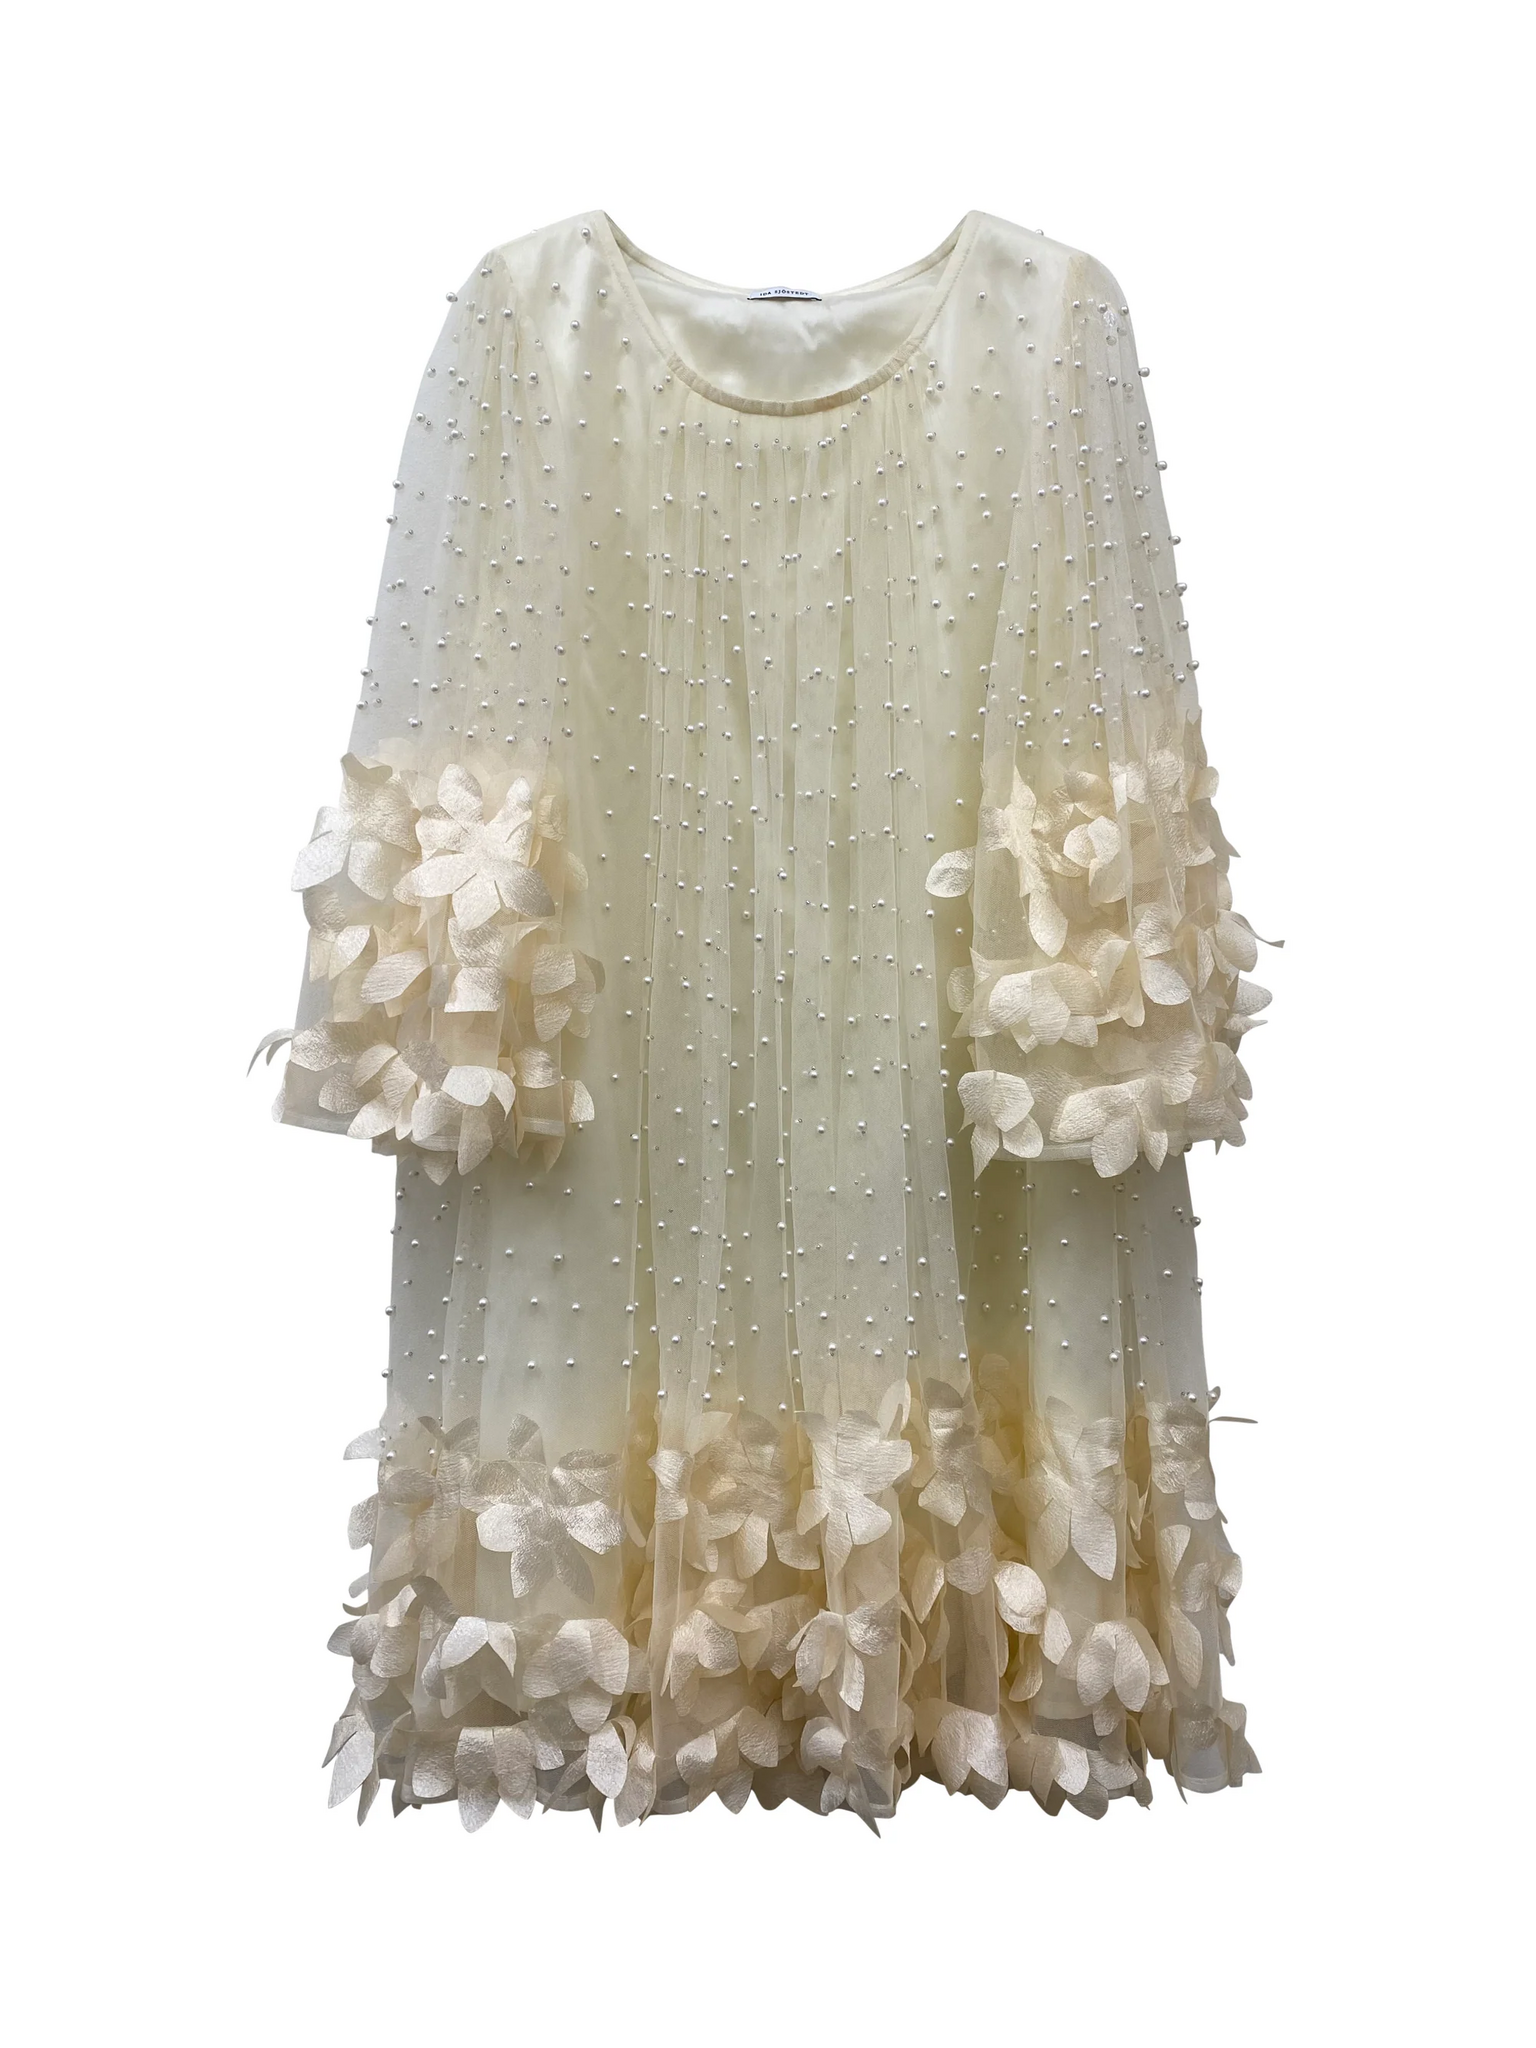 Ida Sjöstet - River Bead Dress Cream White